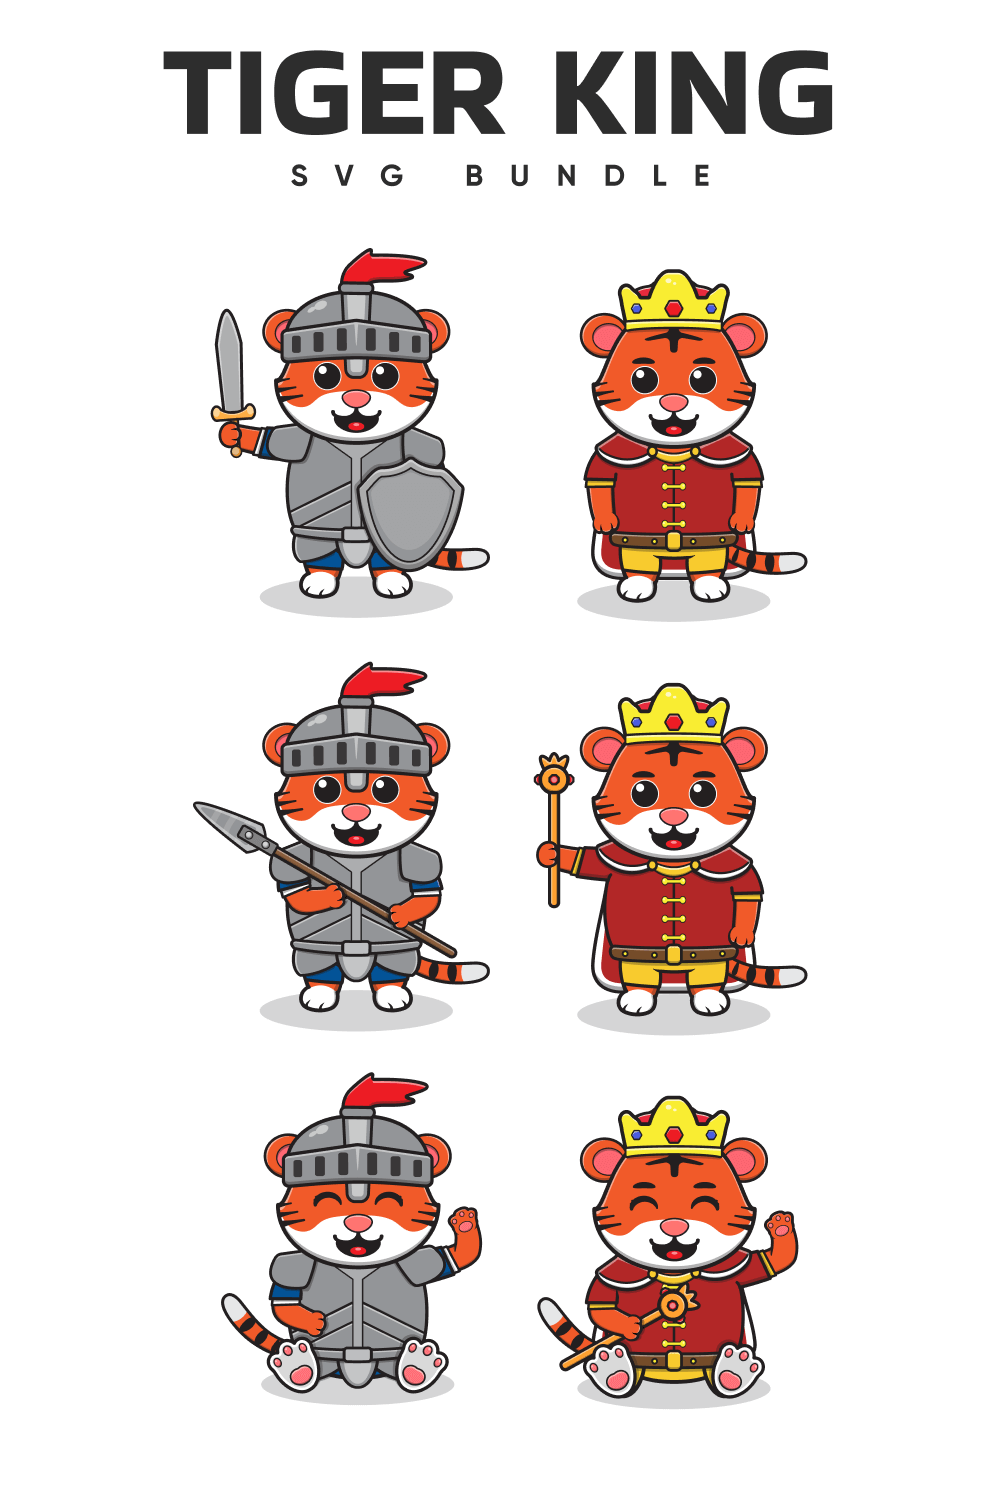 Cartoon character set of a tiger king.